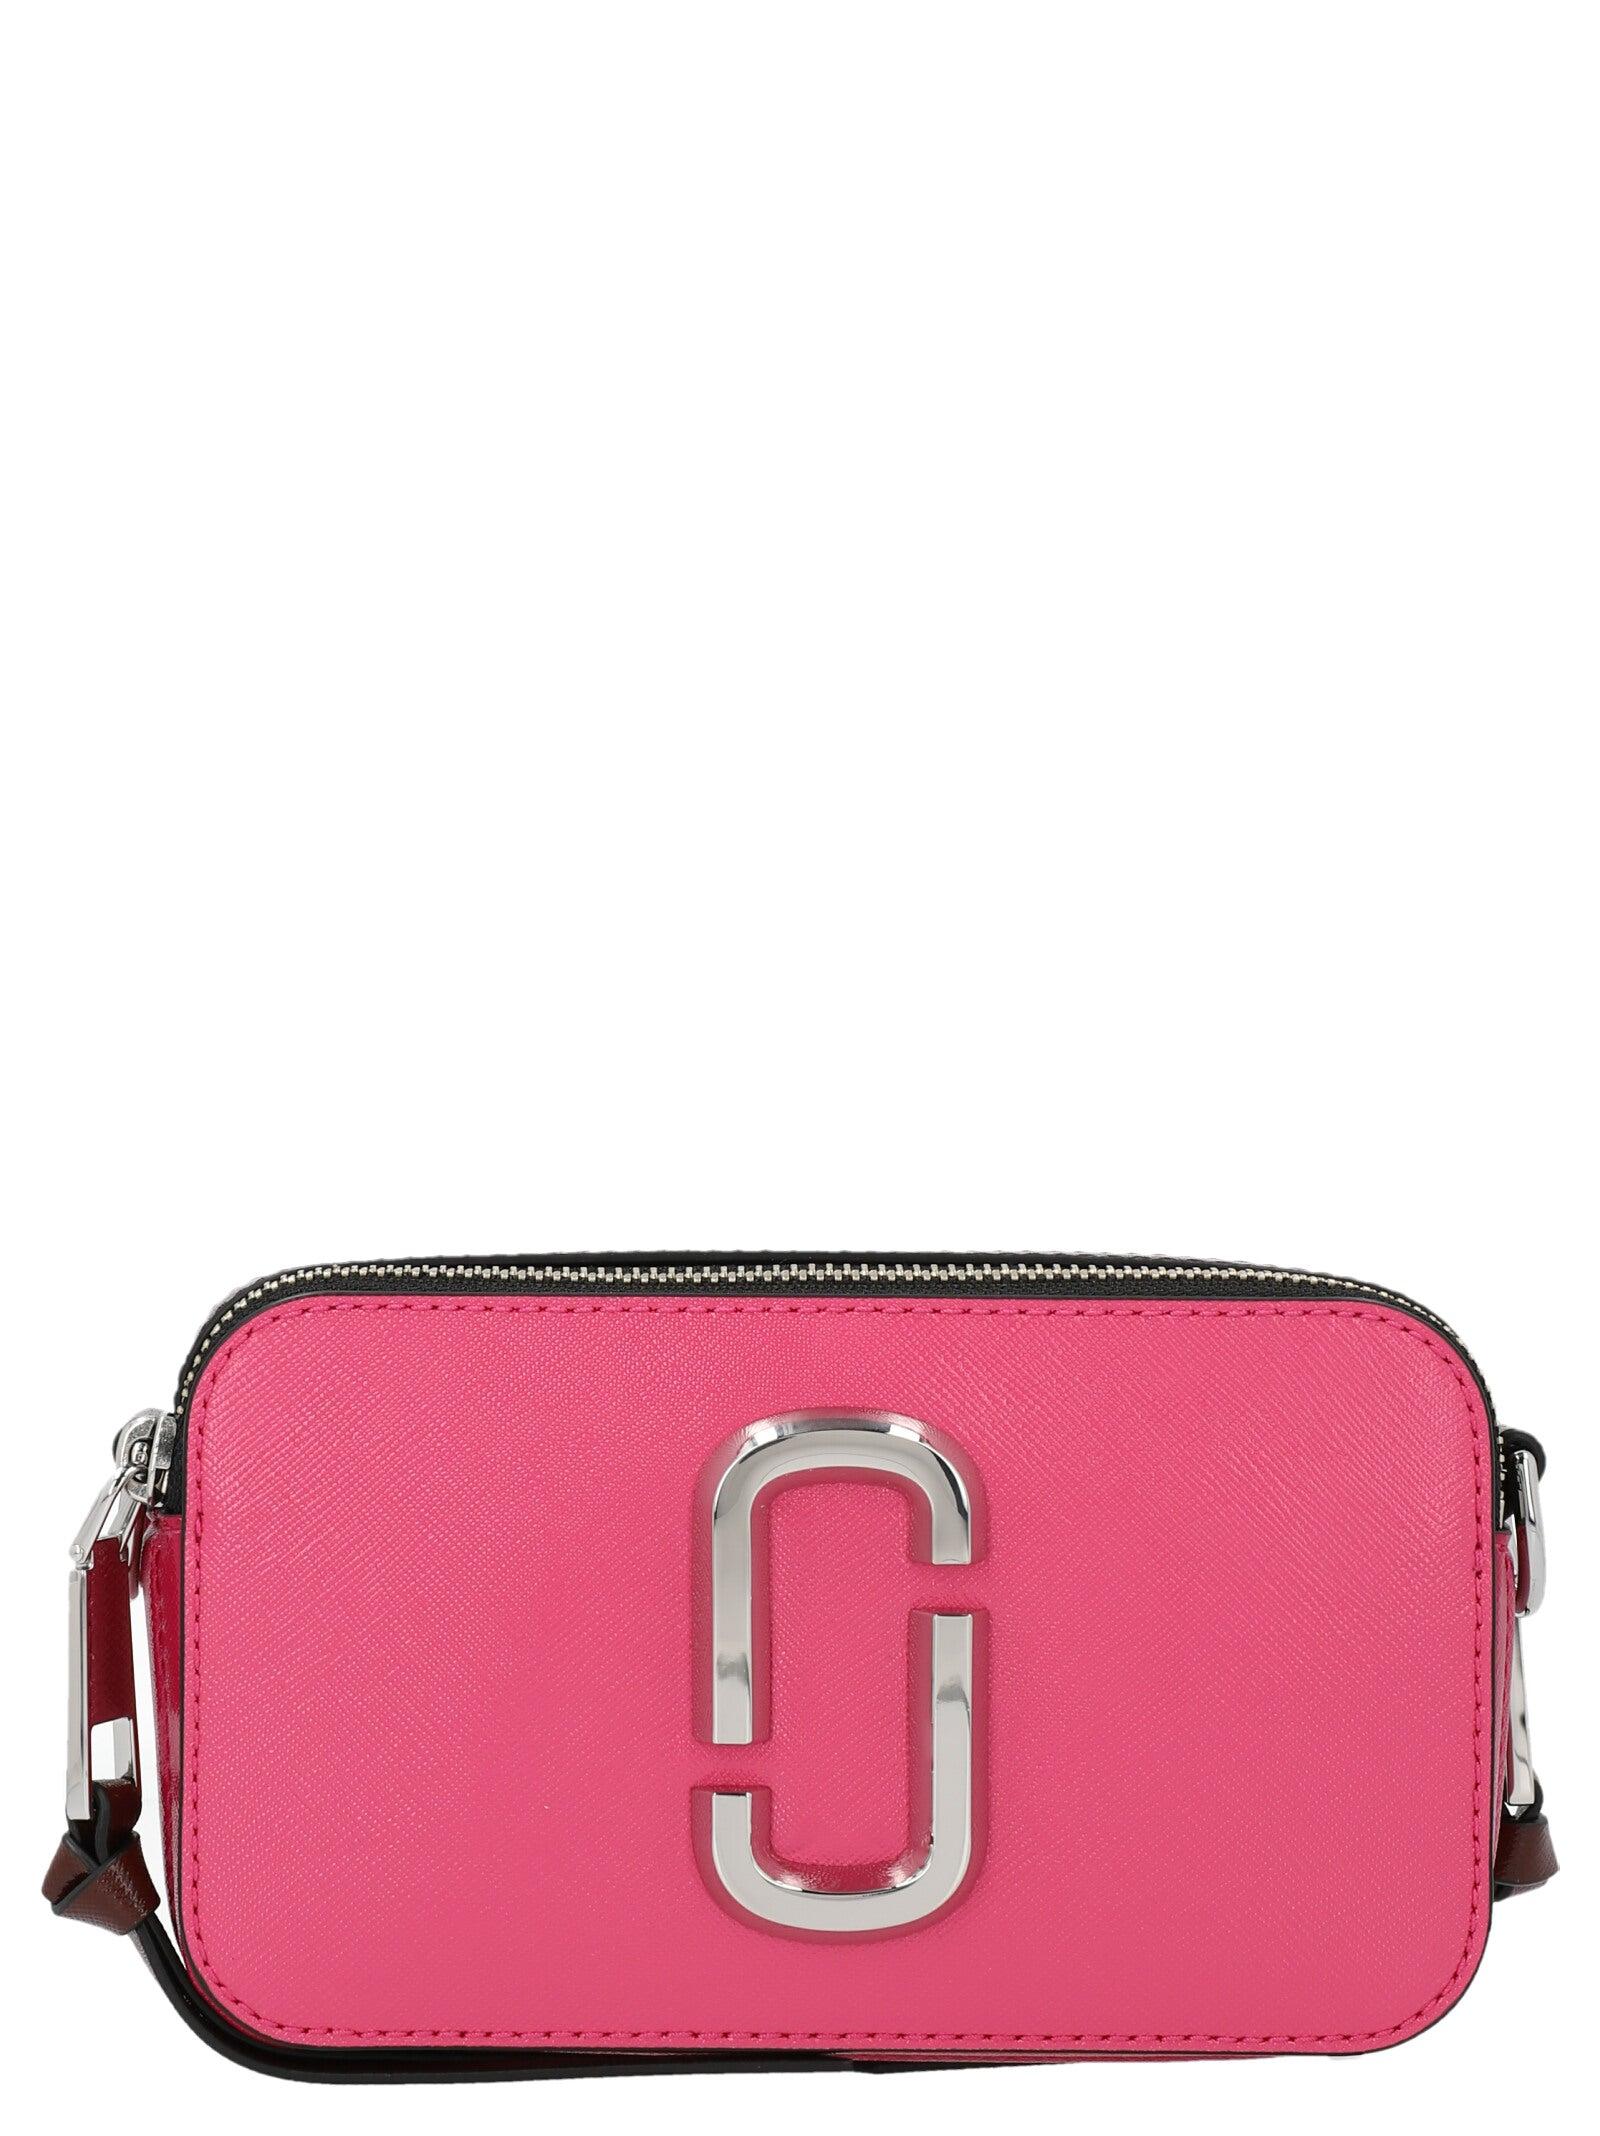 Marc Jacobs Crossbody Snapshot Shoulder Bag gray pink Free Shipping